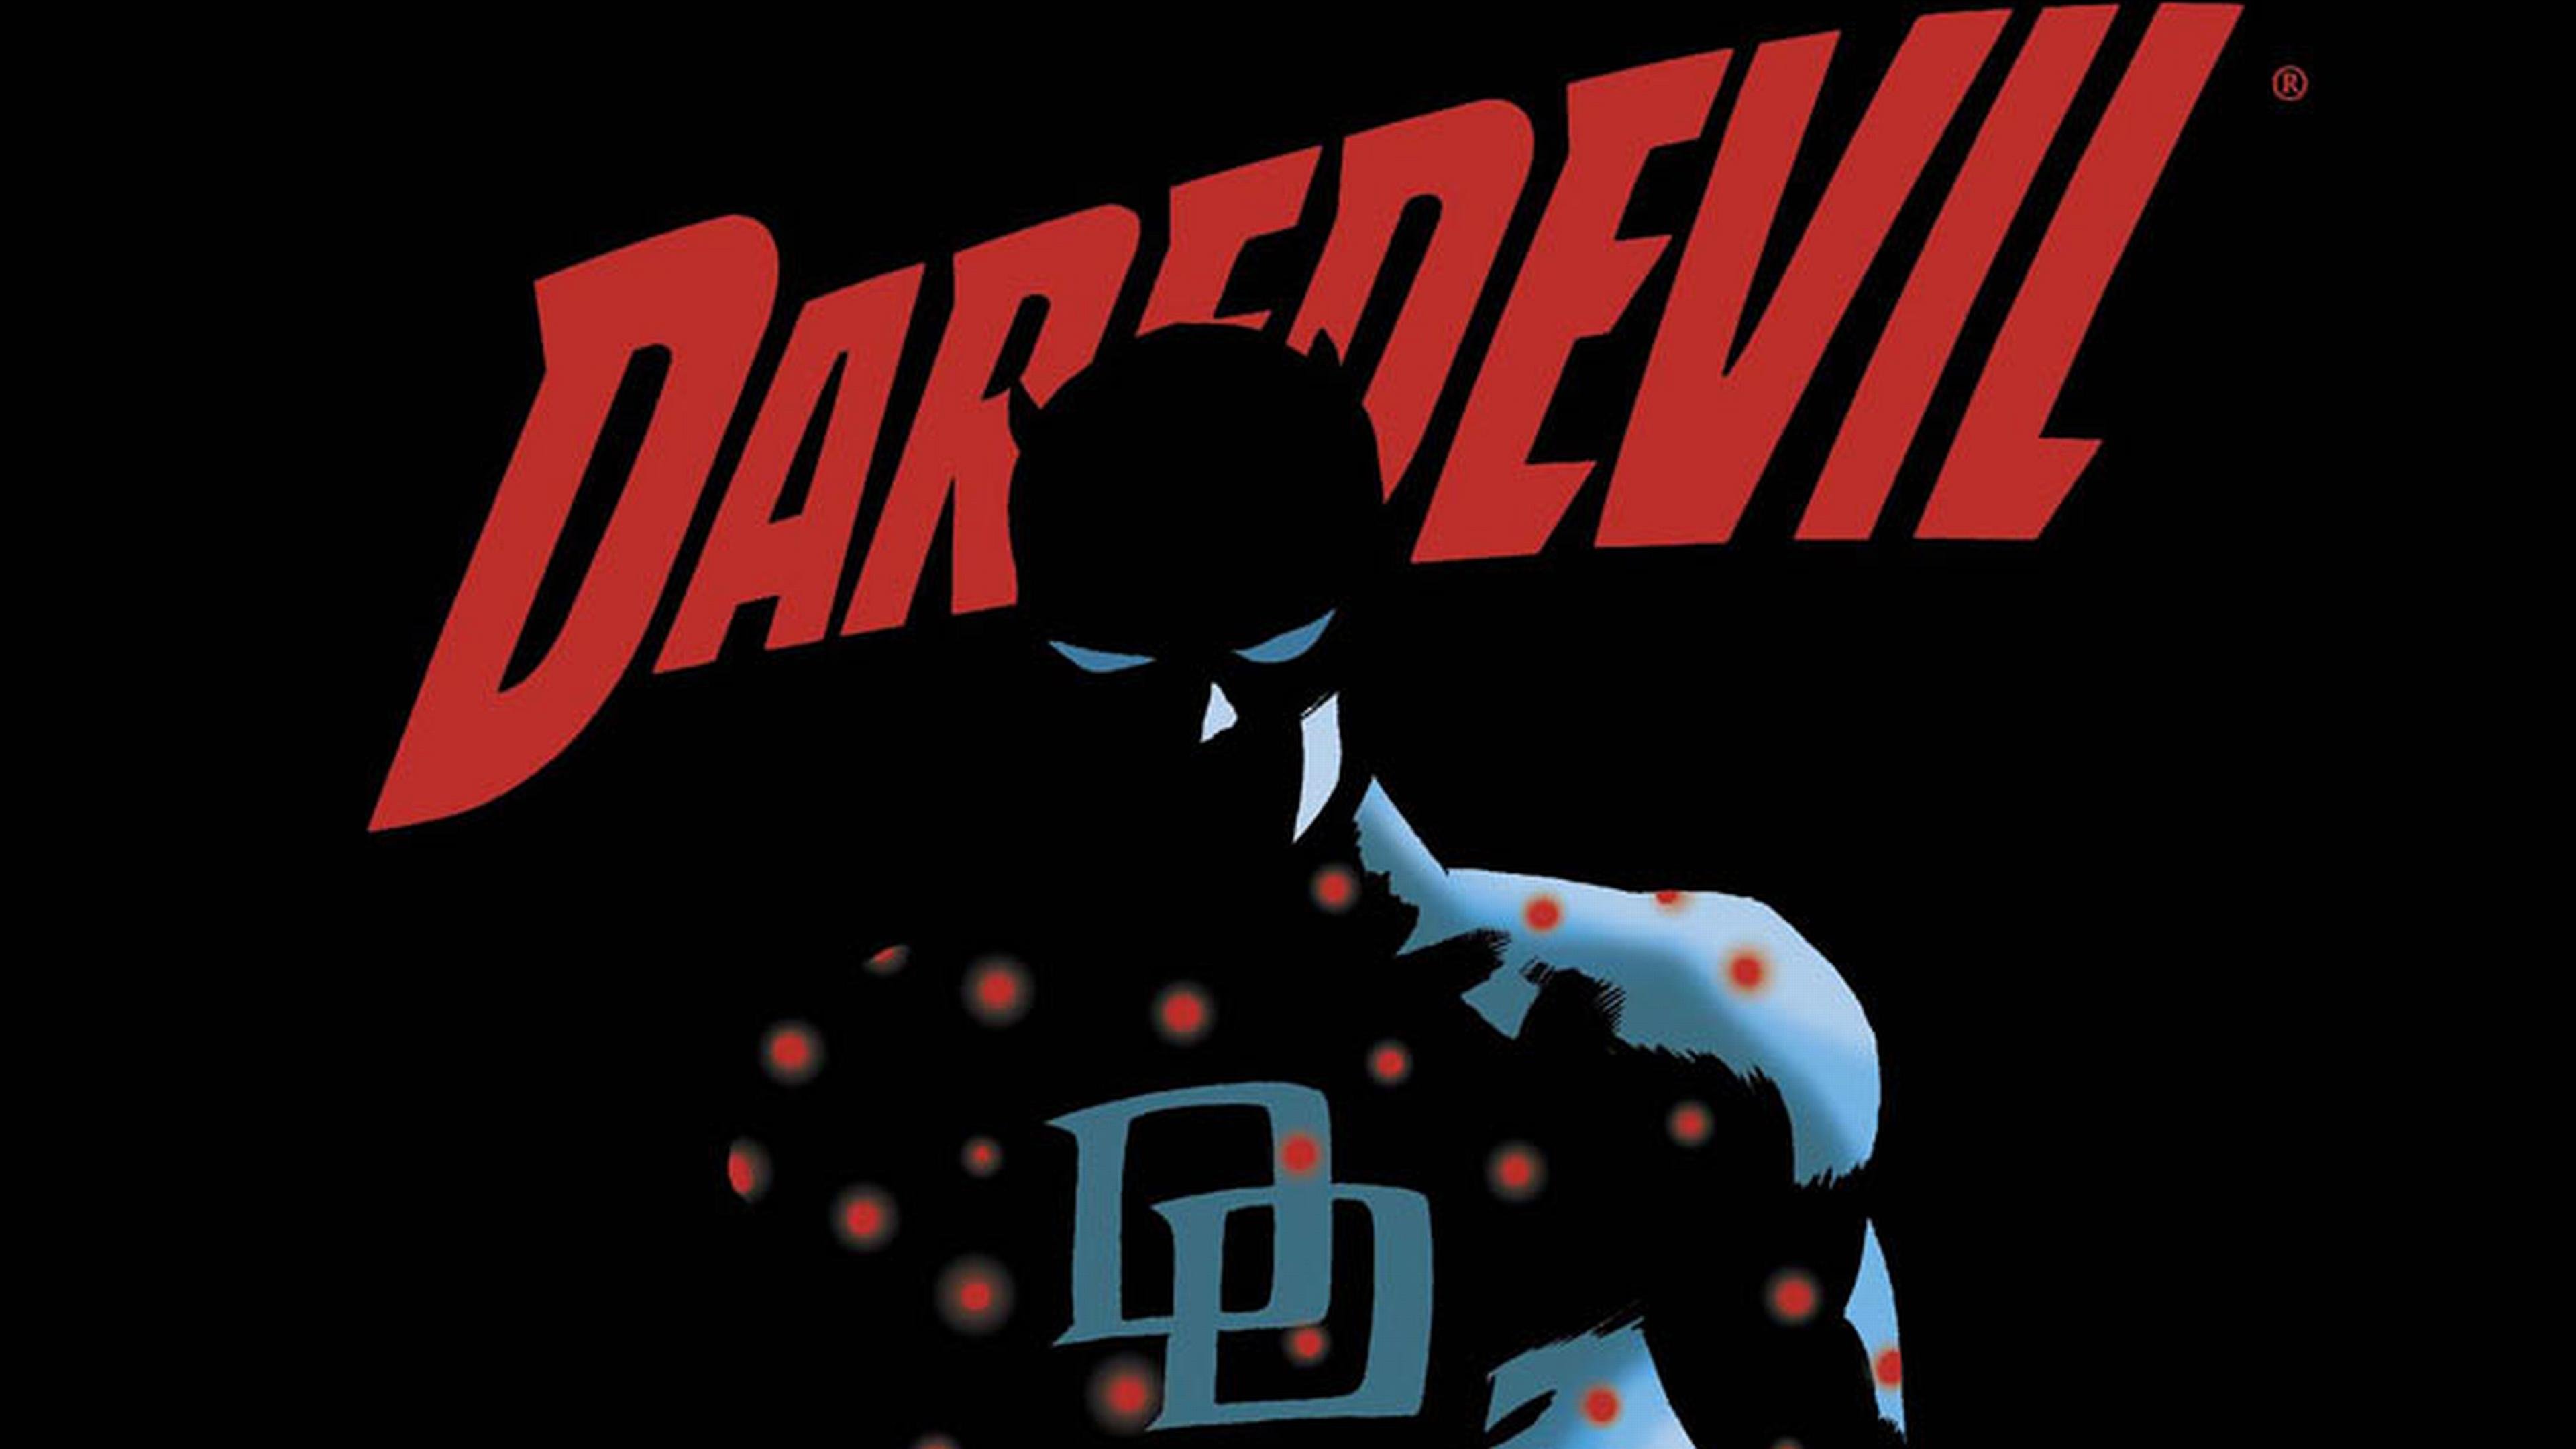 Daredevil Wallpapers